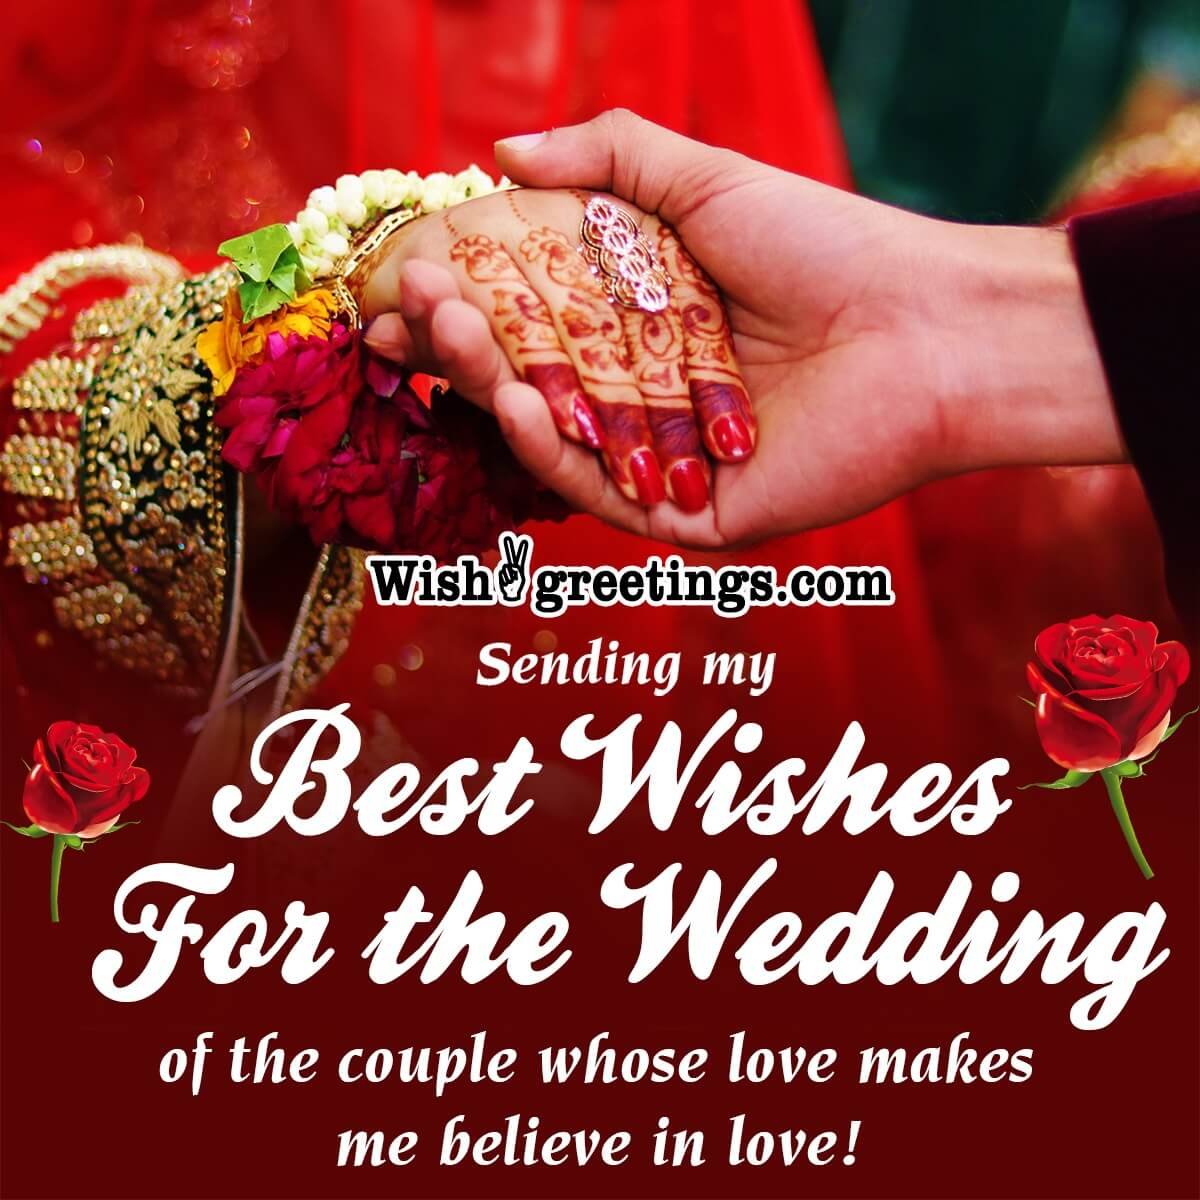 Wedding - Wish Greetings